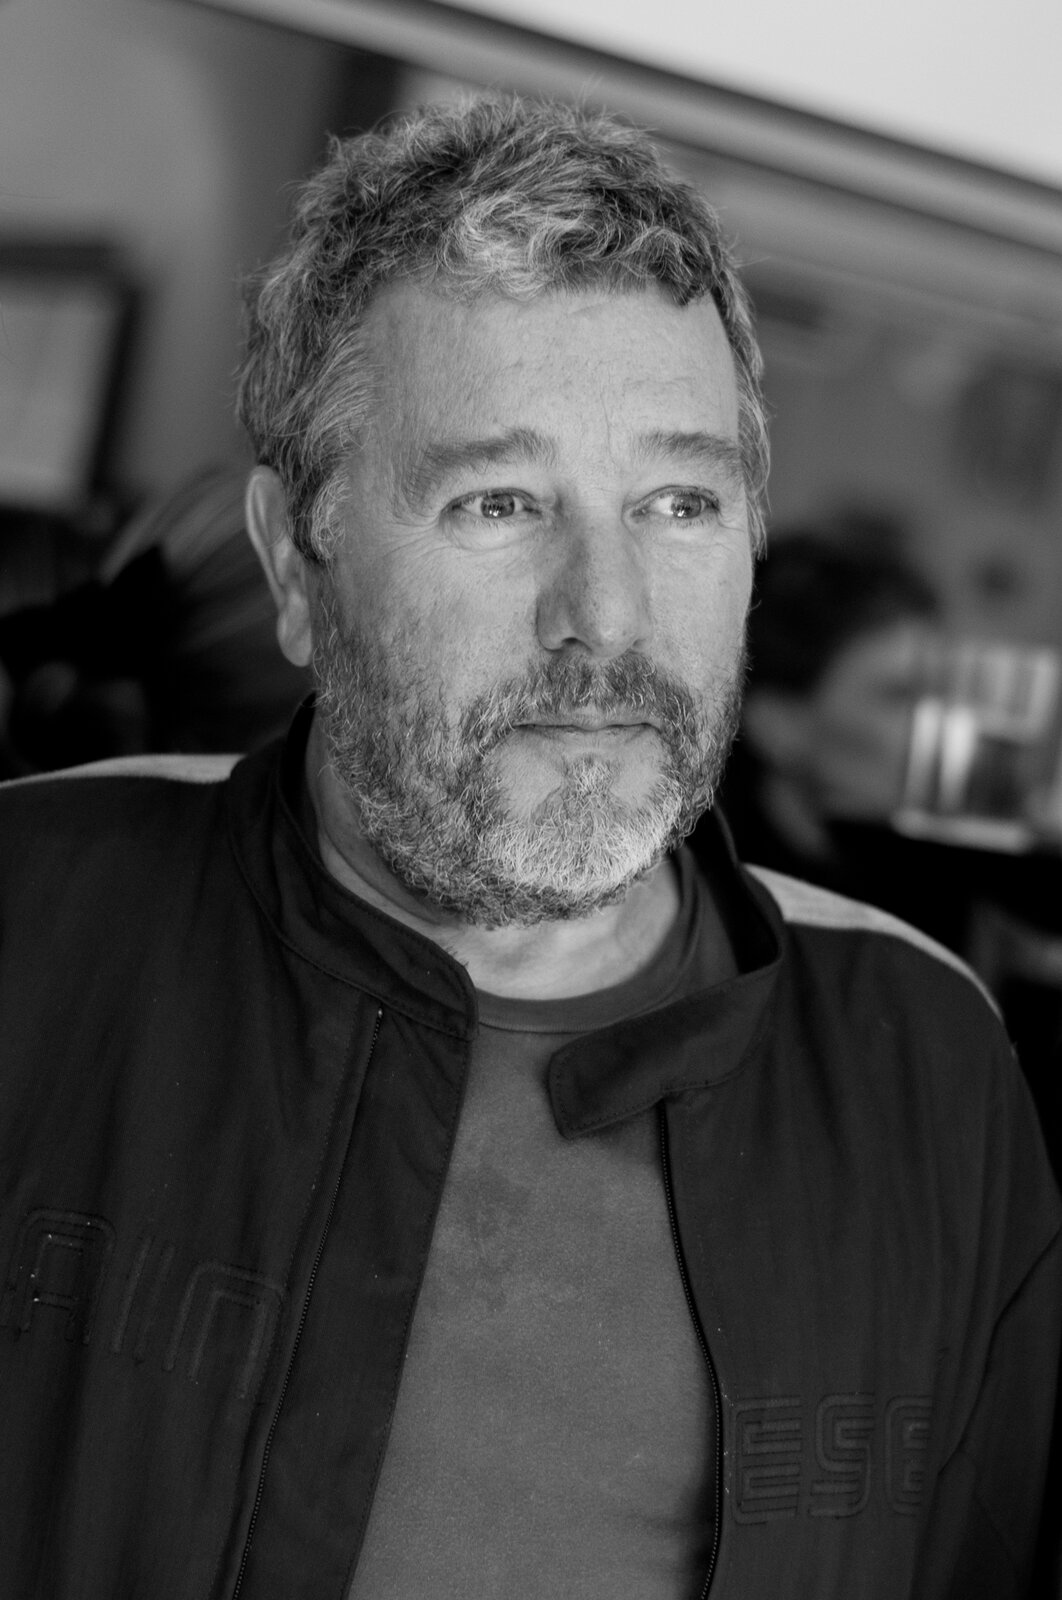 Philippe Starck Philippe Starck Źródło: jikatu, fotografia czarno-biała, licencja: CC BY-SA 2.0.